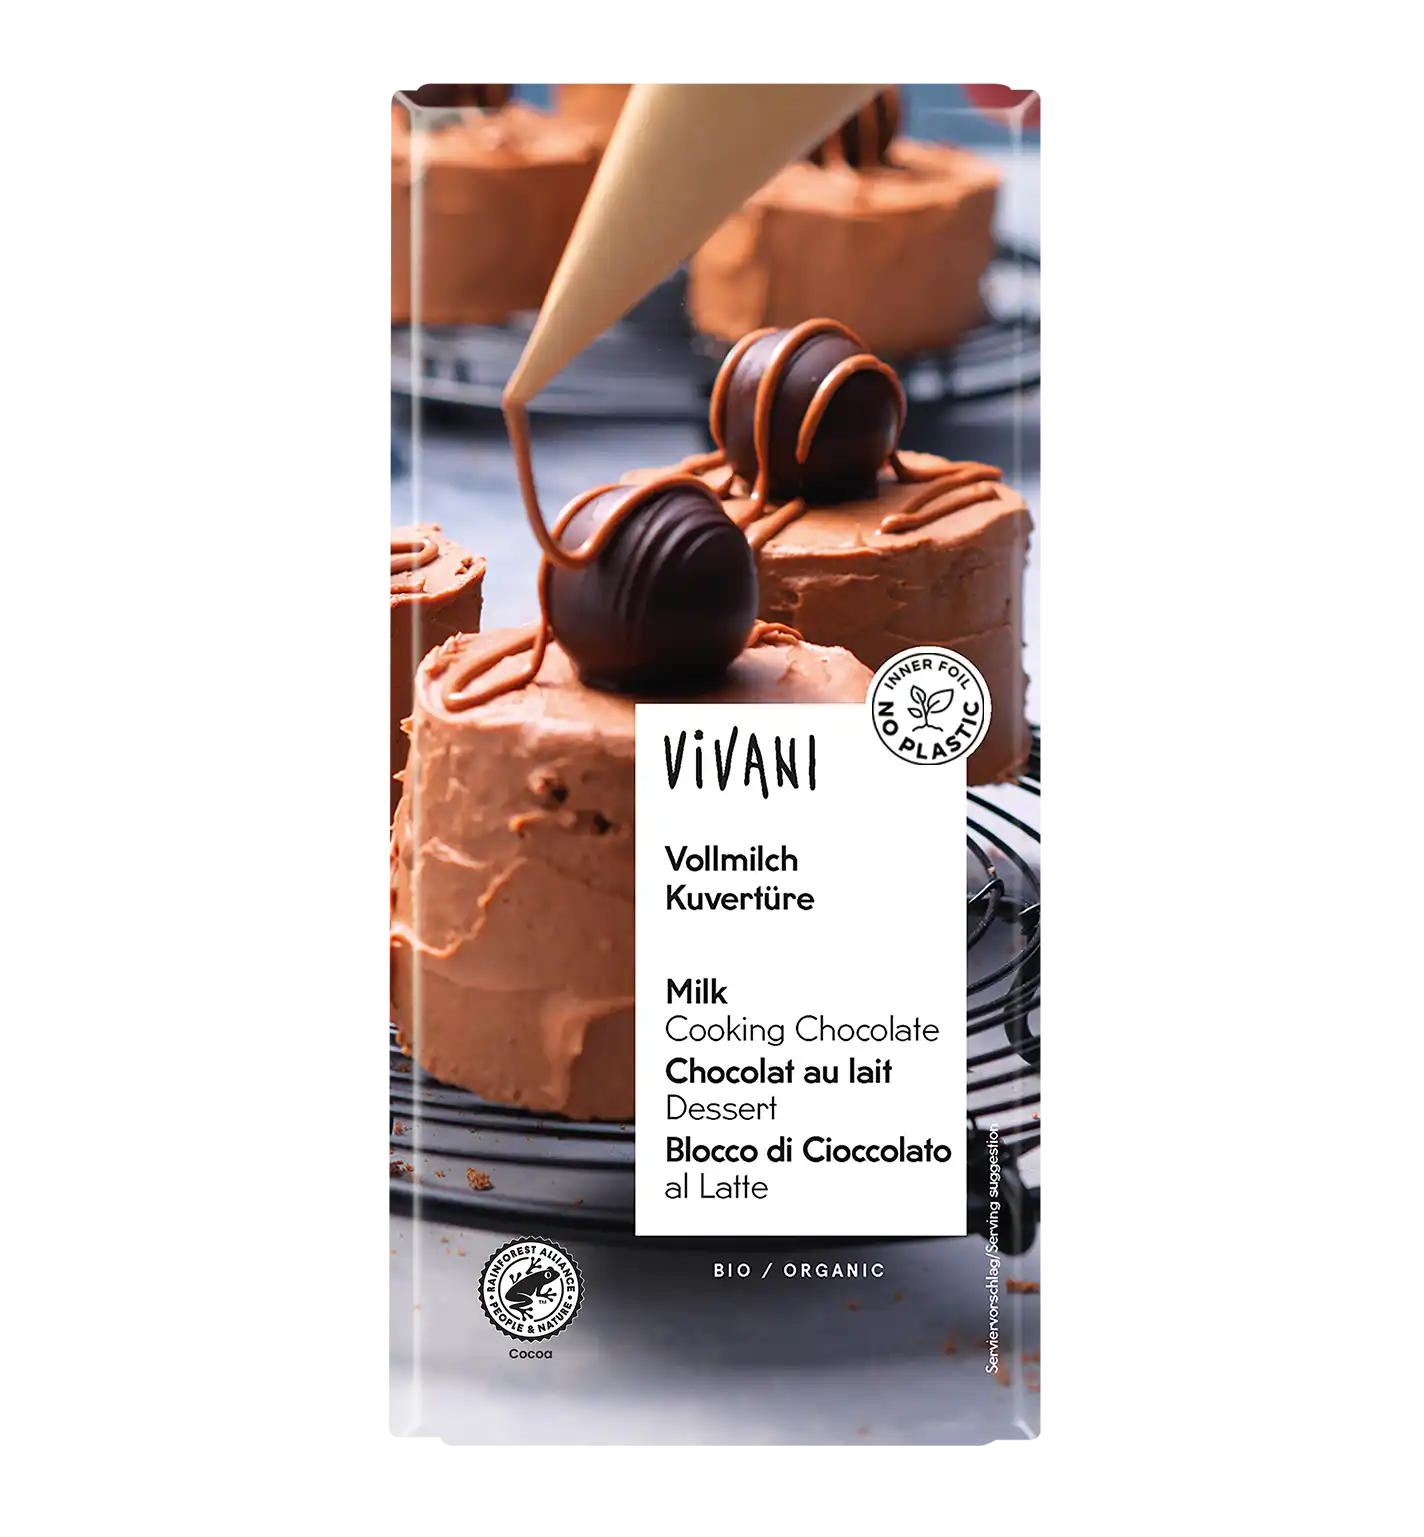 VIVANIs organic Milk Cooking Chocolate with 35 percent cocoa content